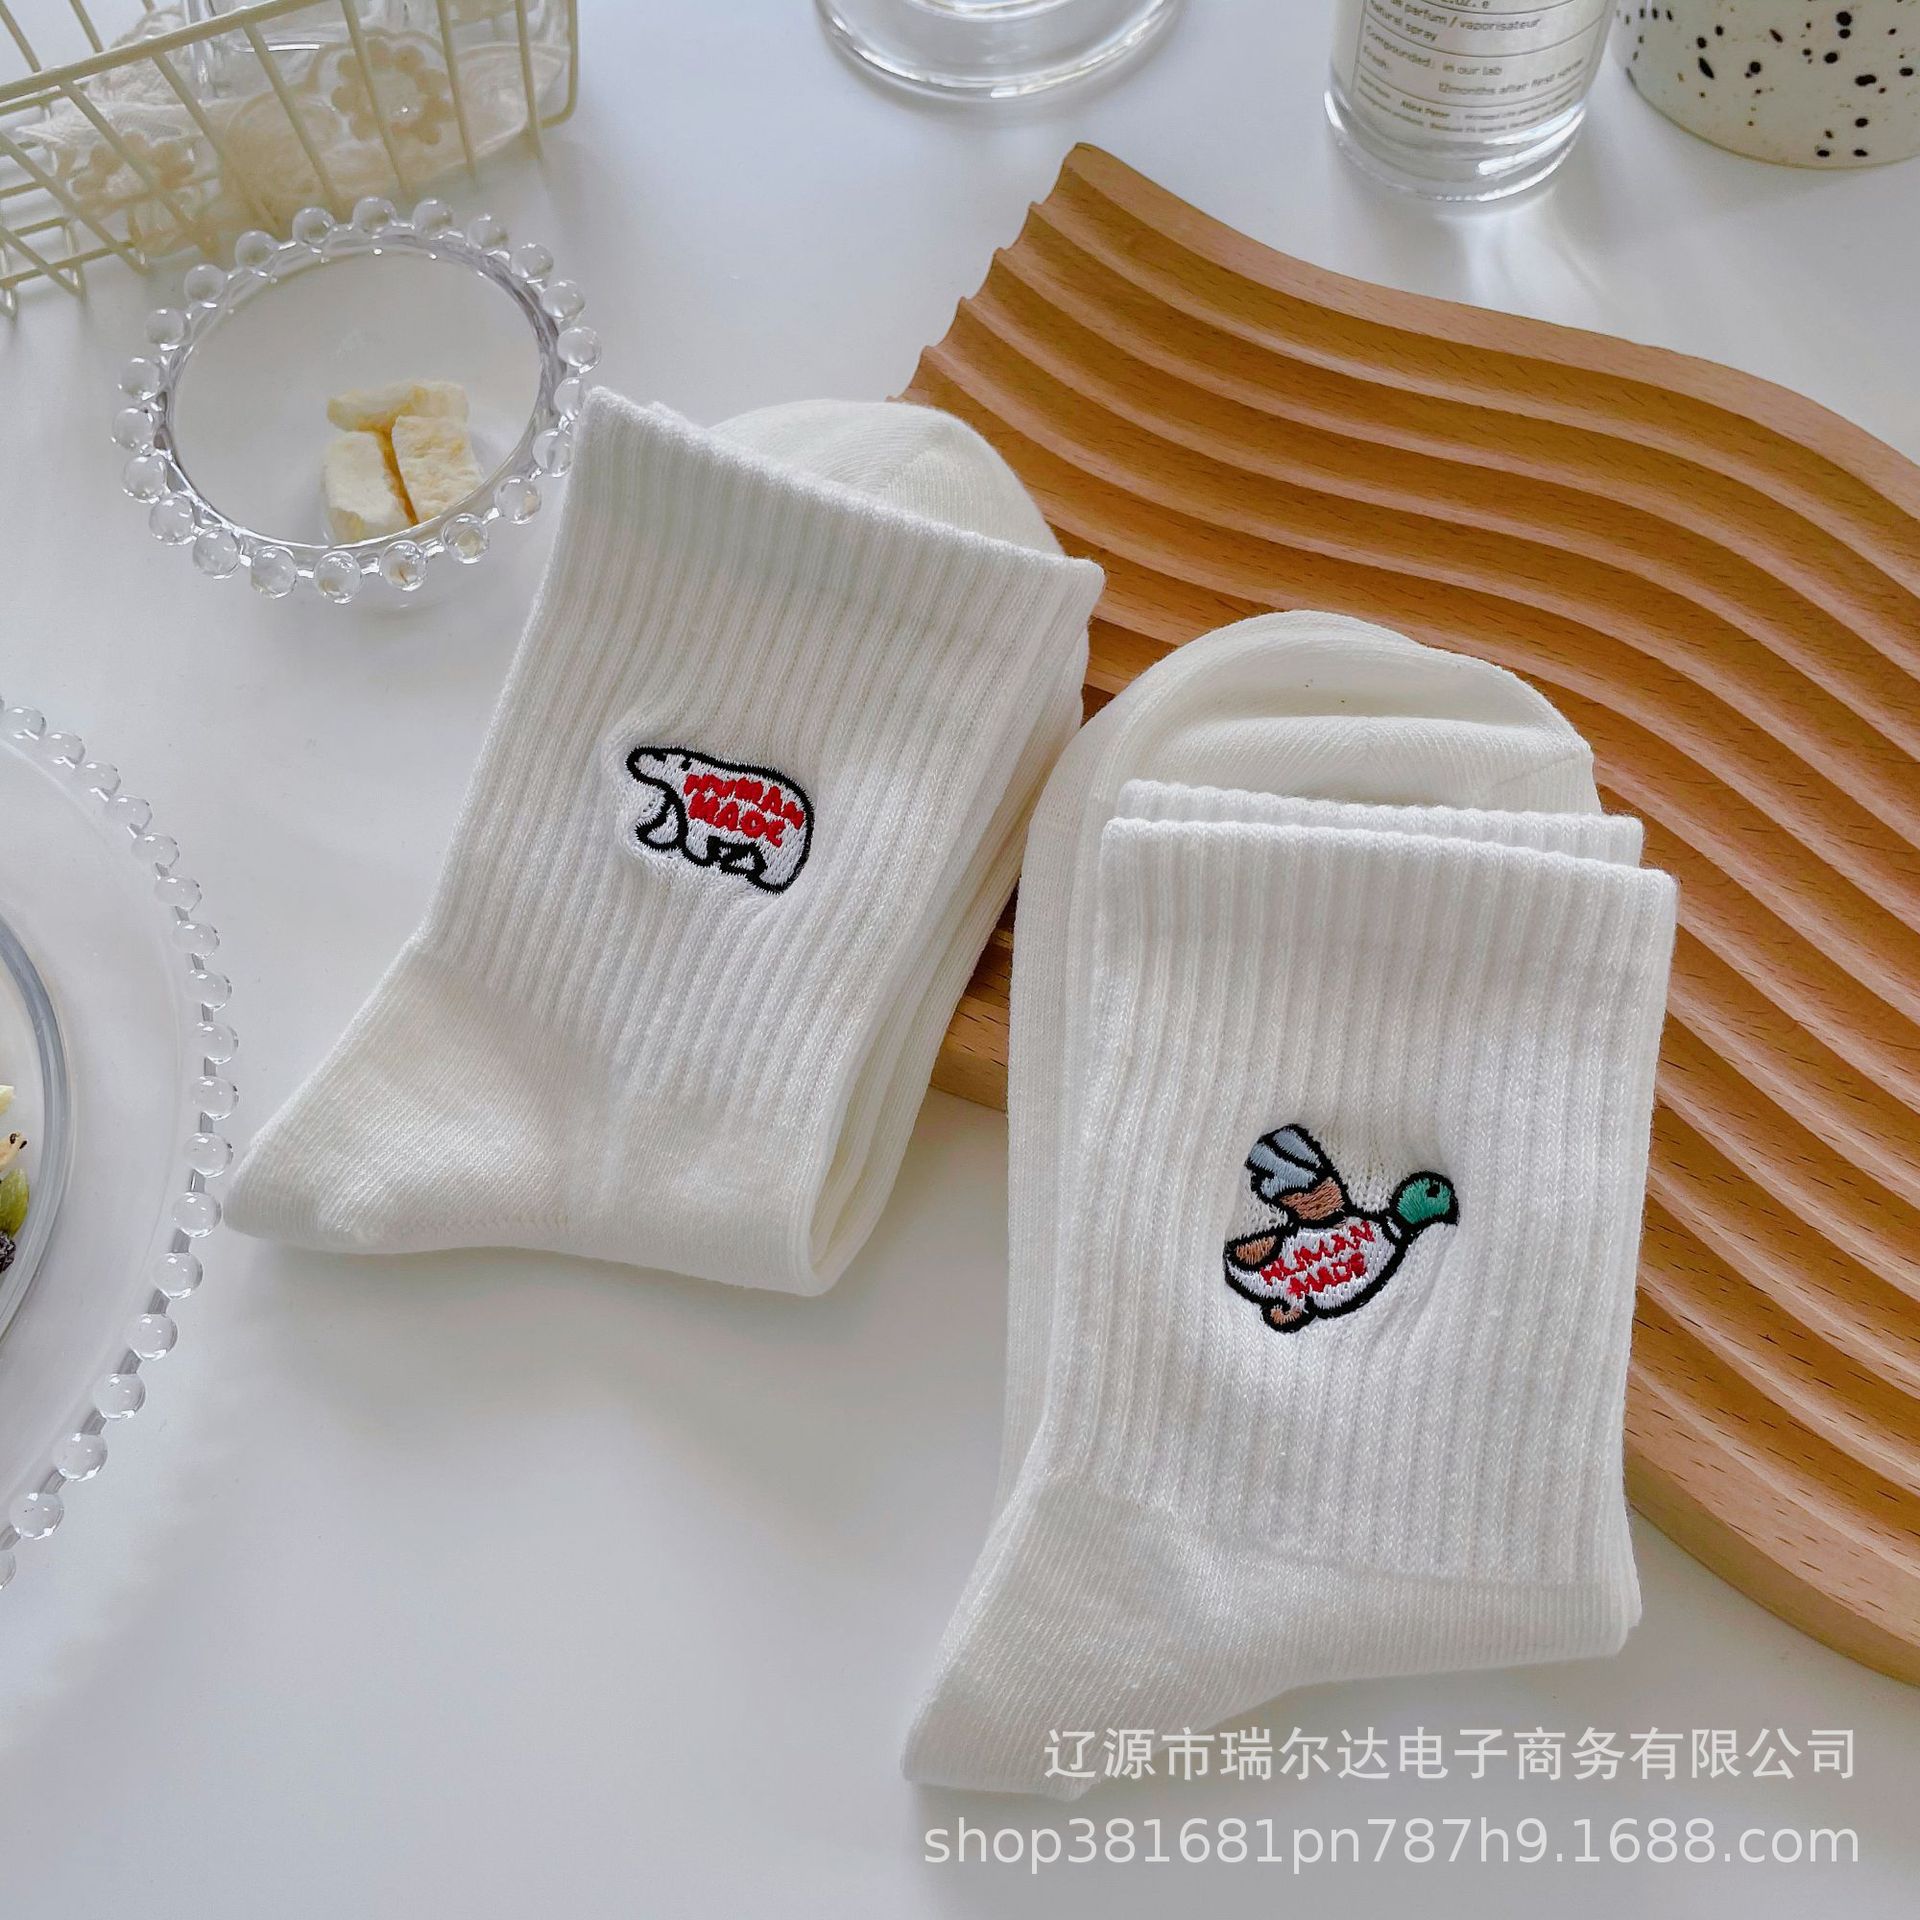 Female casual all-match sweet and fresh Japanese simple cartoon socks